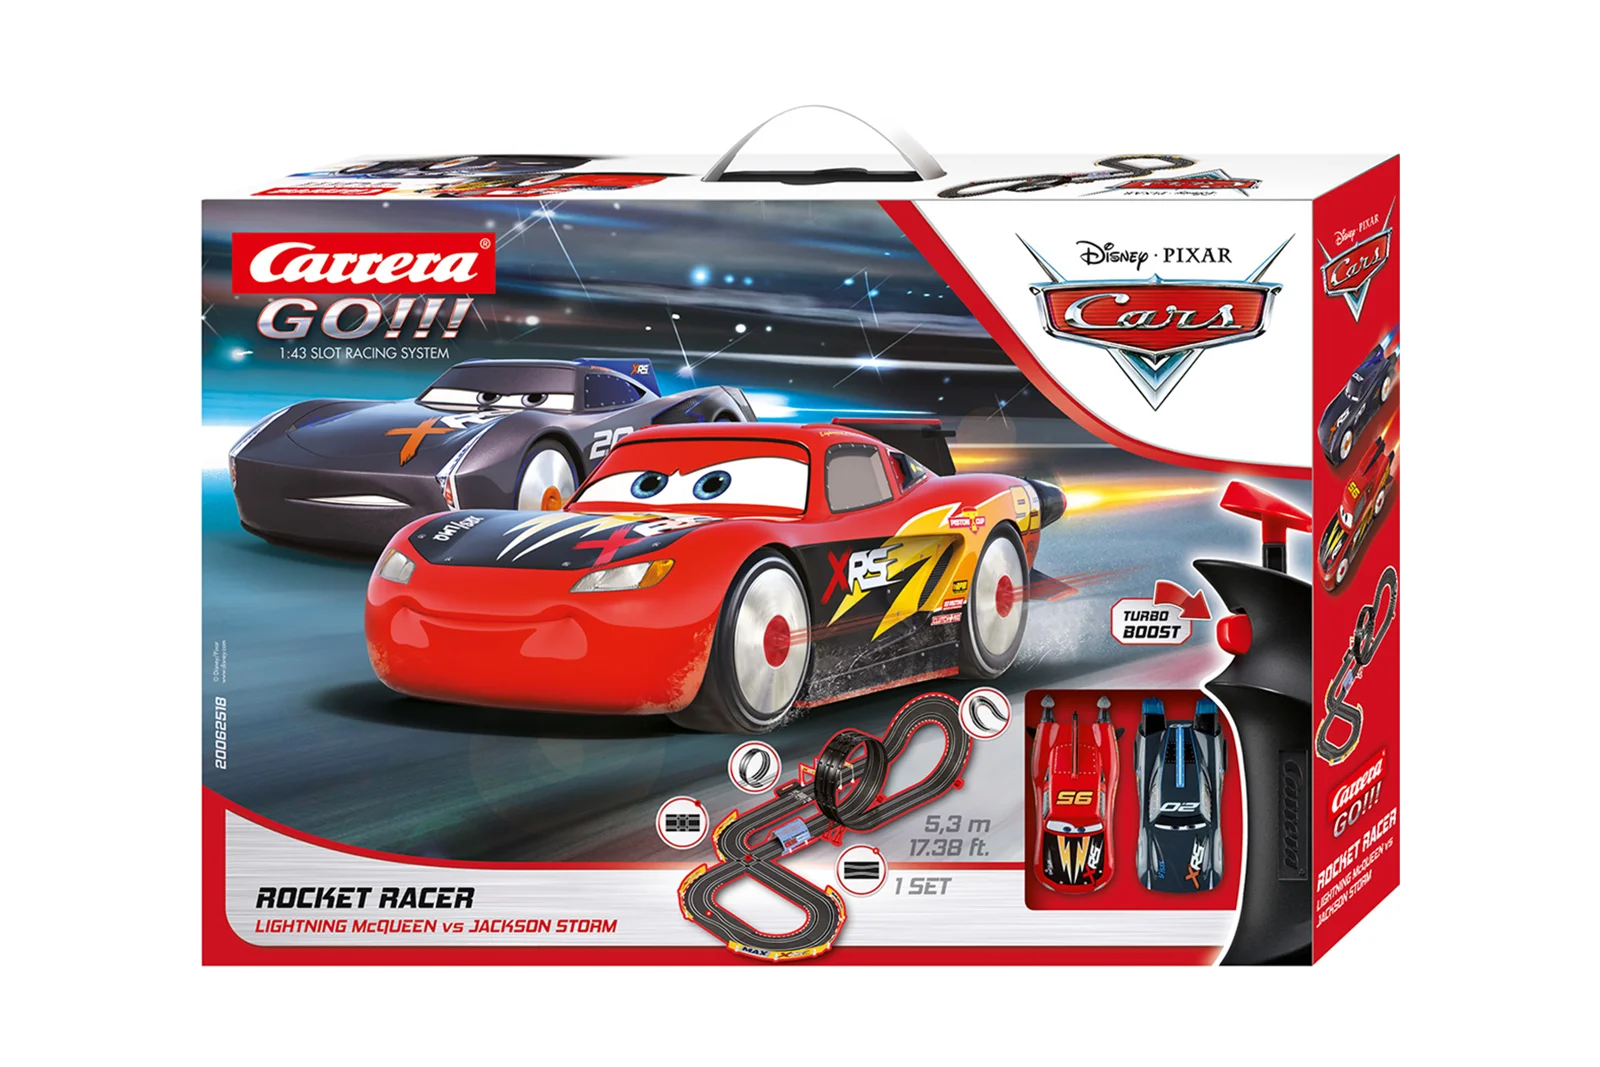 voitures pour circuit Disney Cars “Sally” Go!! carrera Go!!! 1/43 eme analogique 